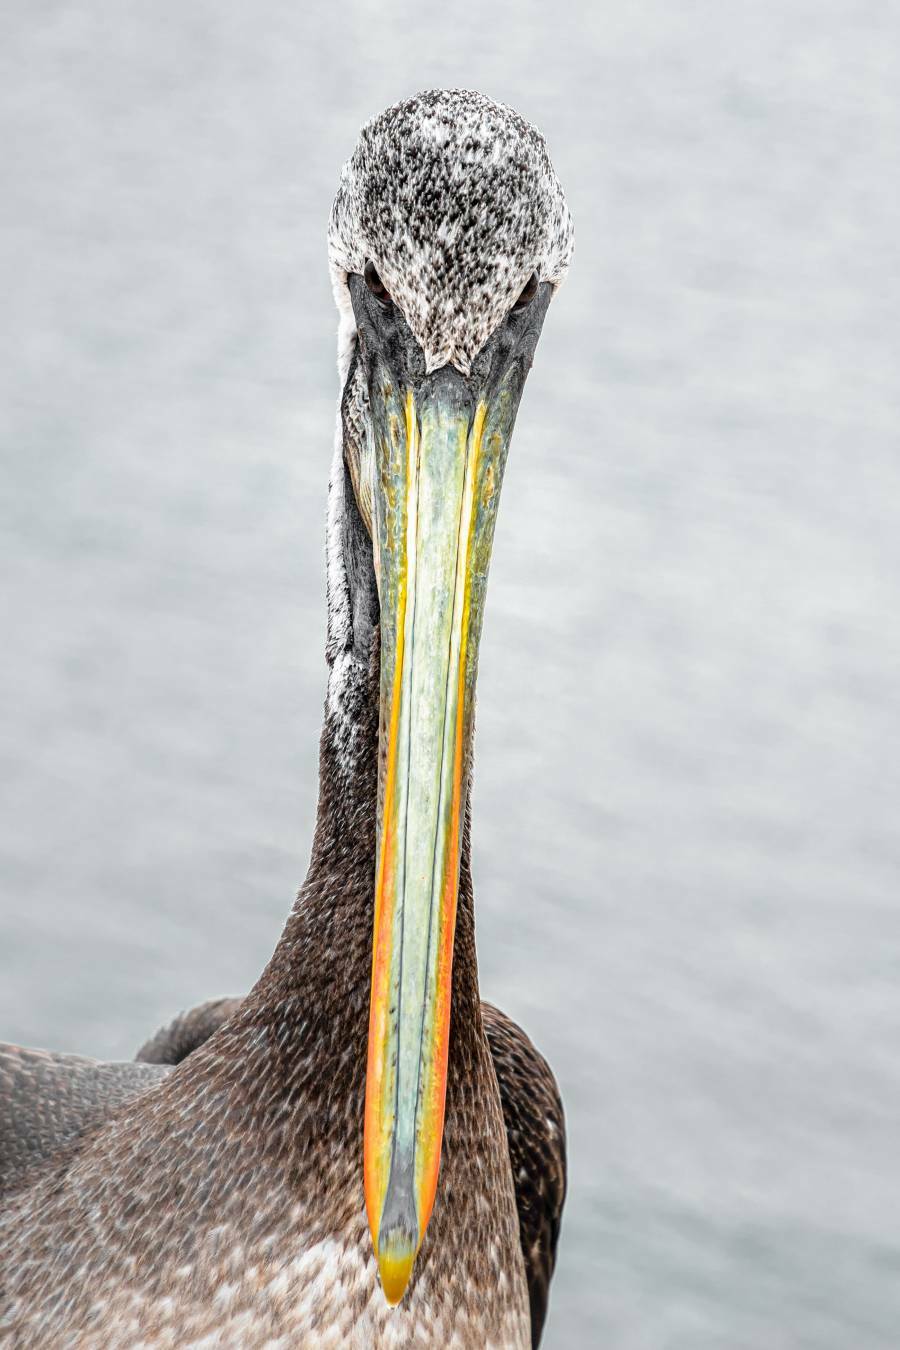 His Majesty the Pelican, Peru